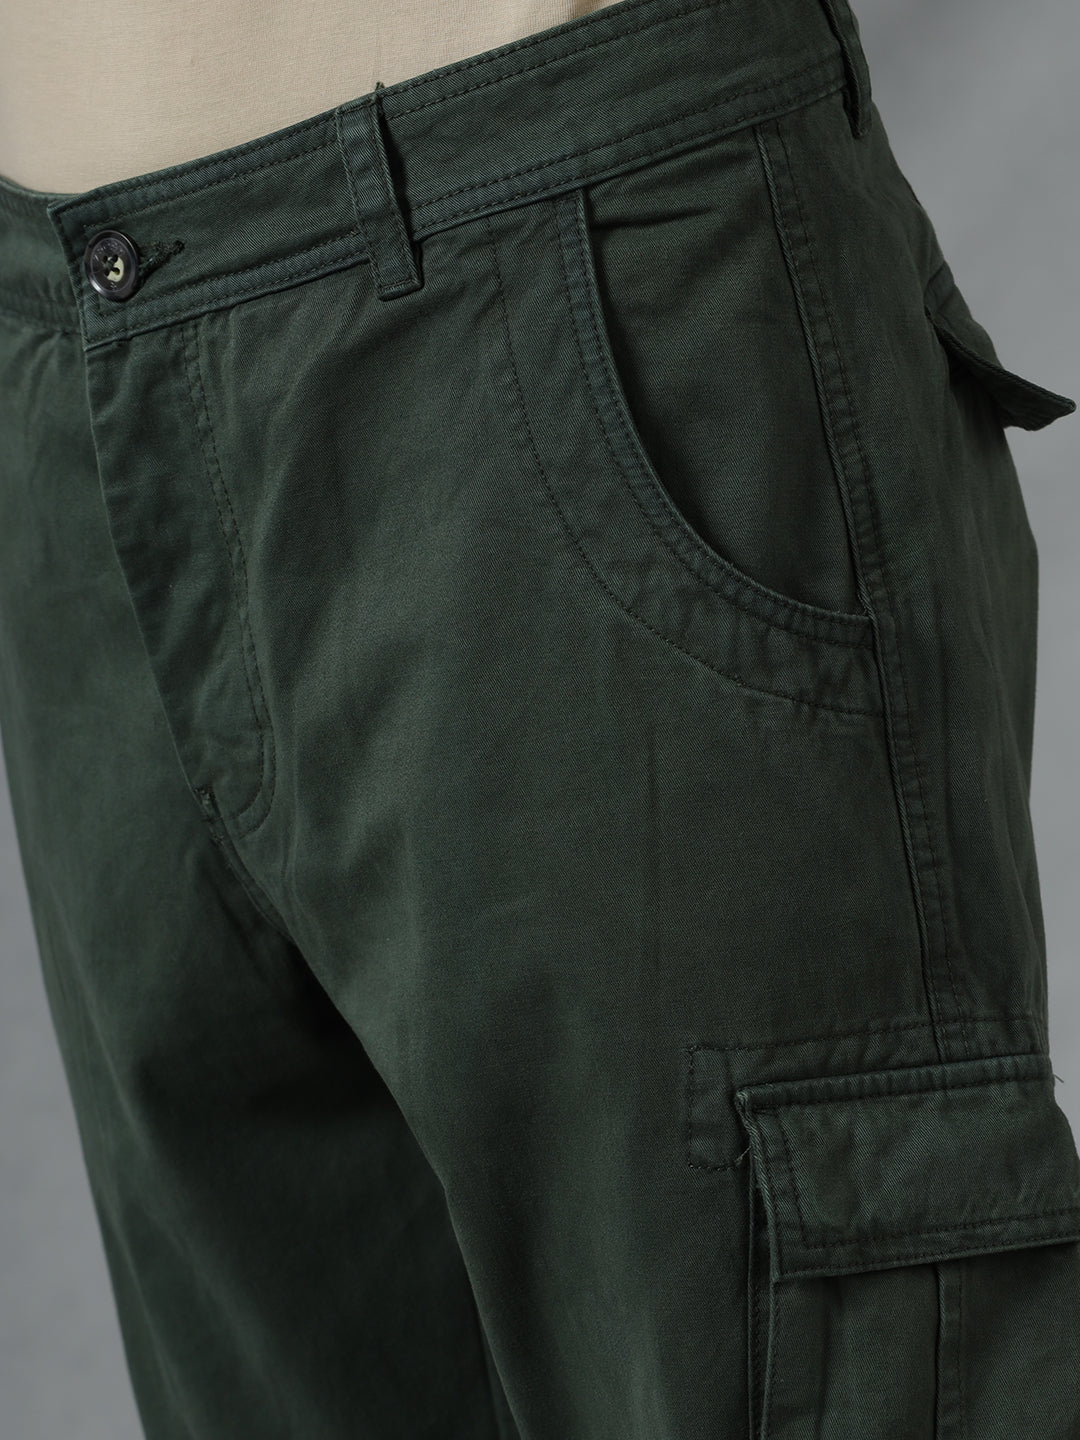 Solid Pockets Olive Cargo Pants